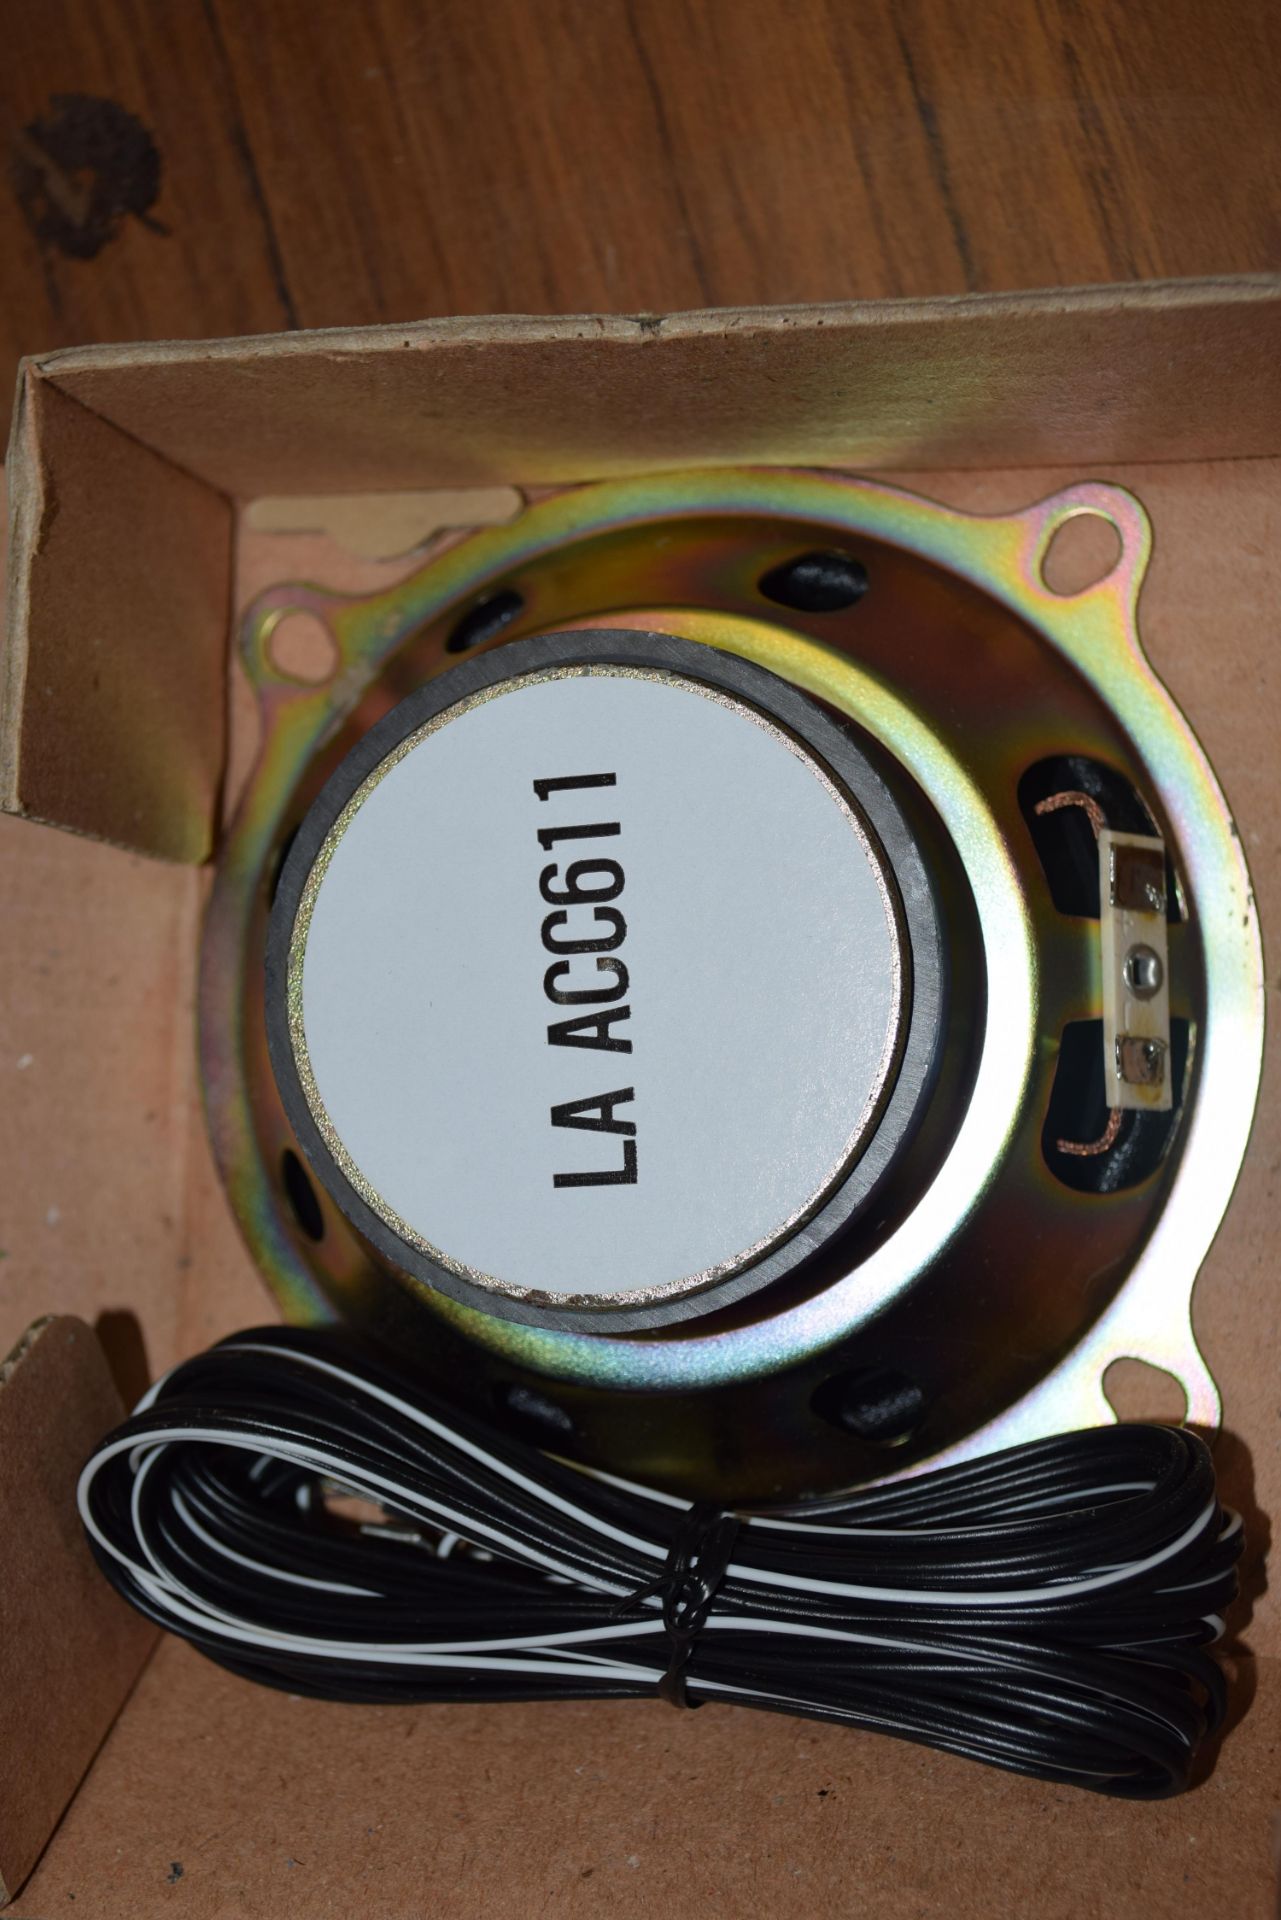 10 BOXED PHOENIX AUDIO CAR SPEAKERS, MODEL NO LAACC611 - Image 2 of 4